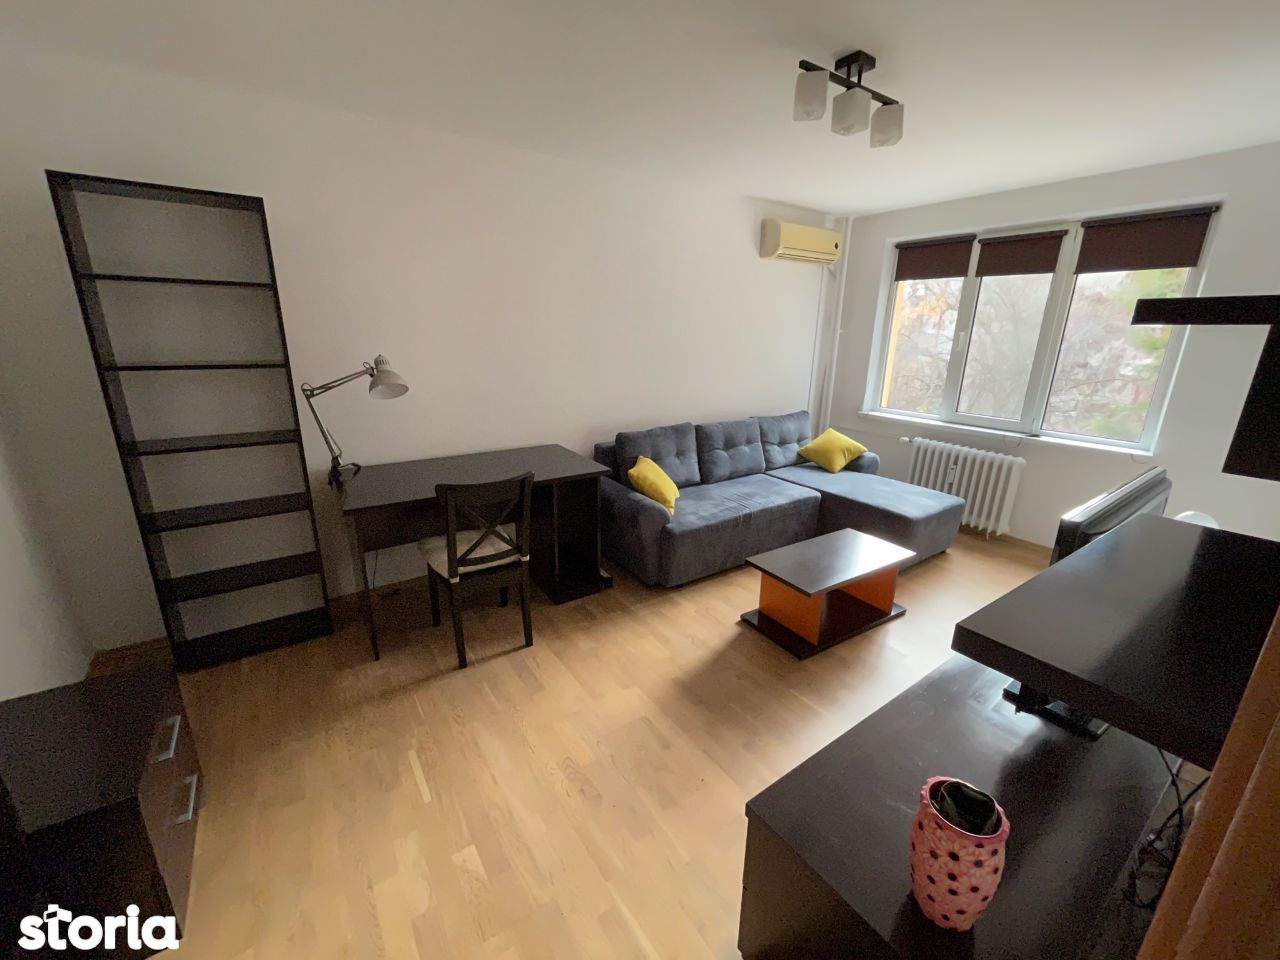 PROPRIETAR - Apartament 2 camere - Nicolae Grigorescu - mobilat/utilat